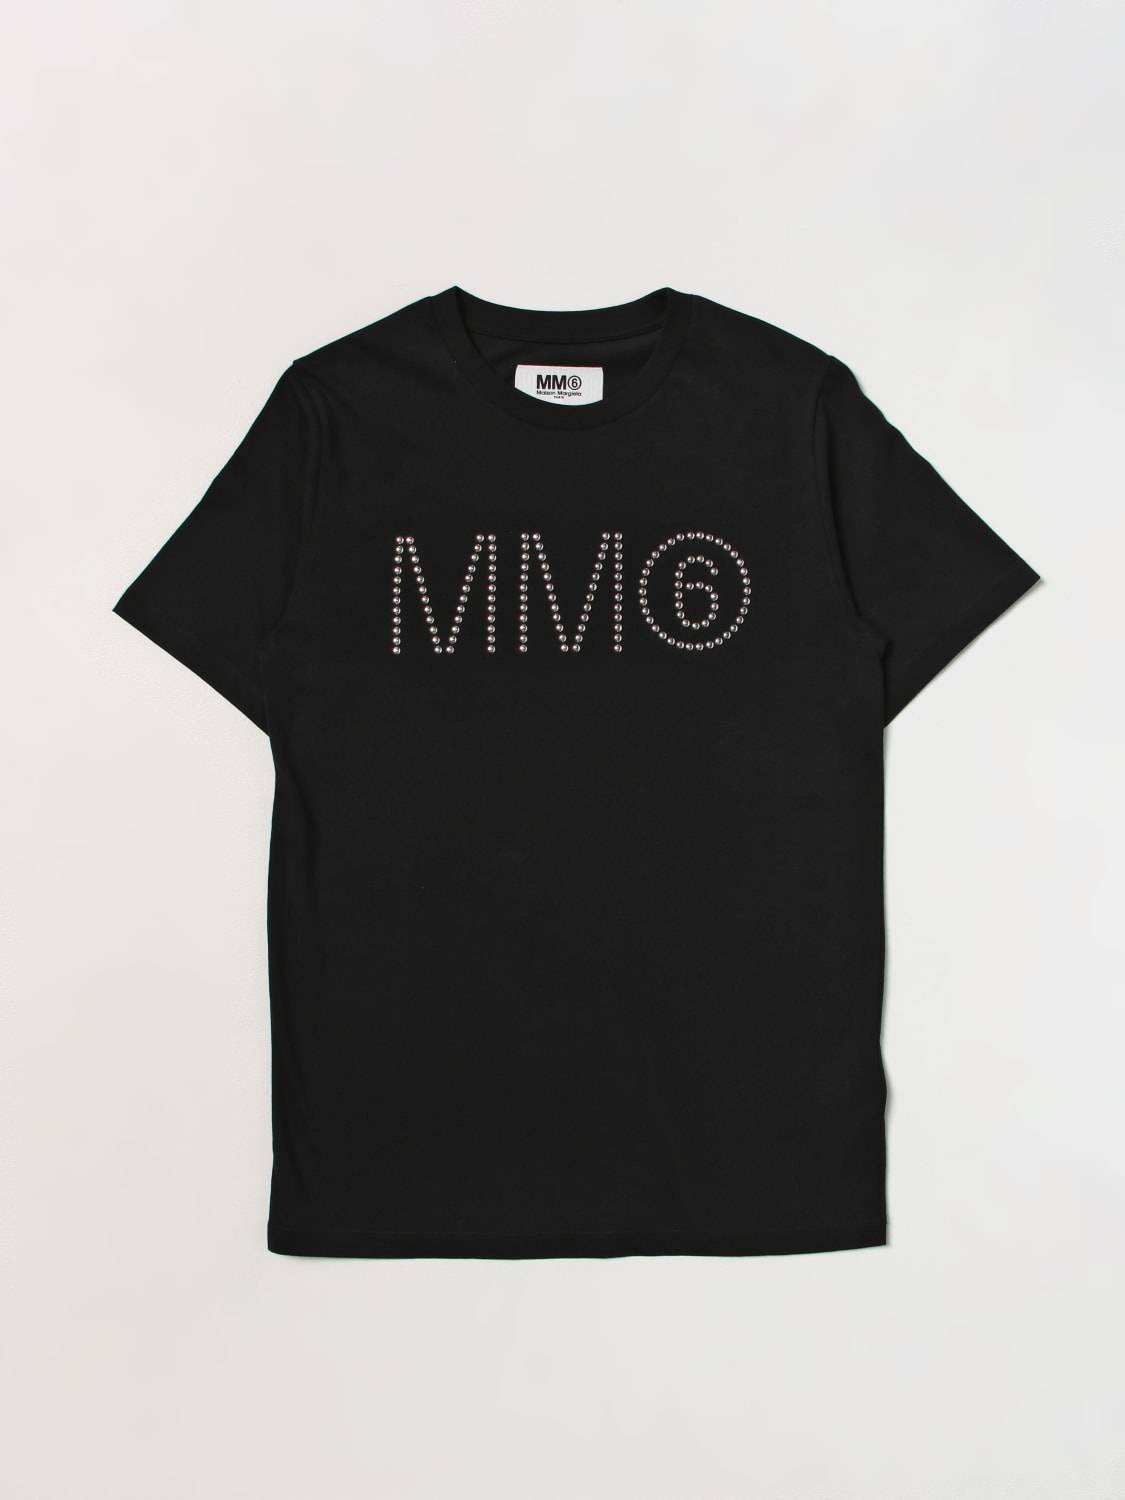 MM6 MAISON MARGIELA: T-shirt kids - Black | MM6 MAISON MARGIELA t-shirt ...